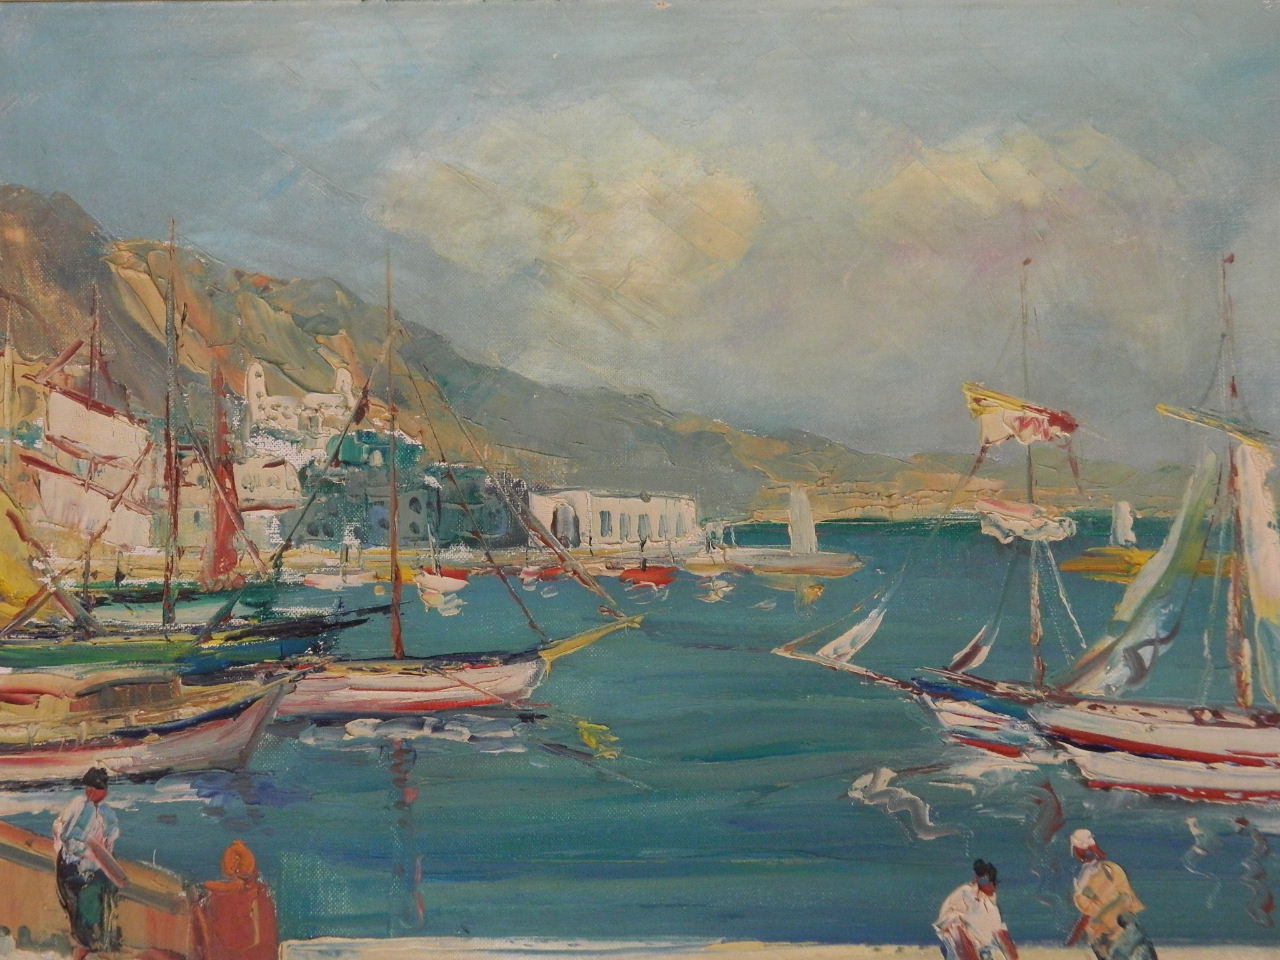 Carlo F. Burla, oil on canvas depicting Monaco harbour, 20" x 16"